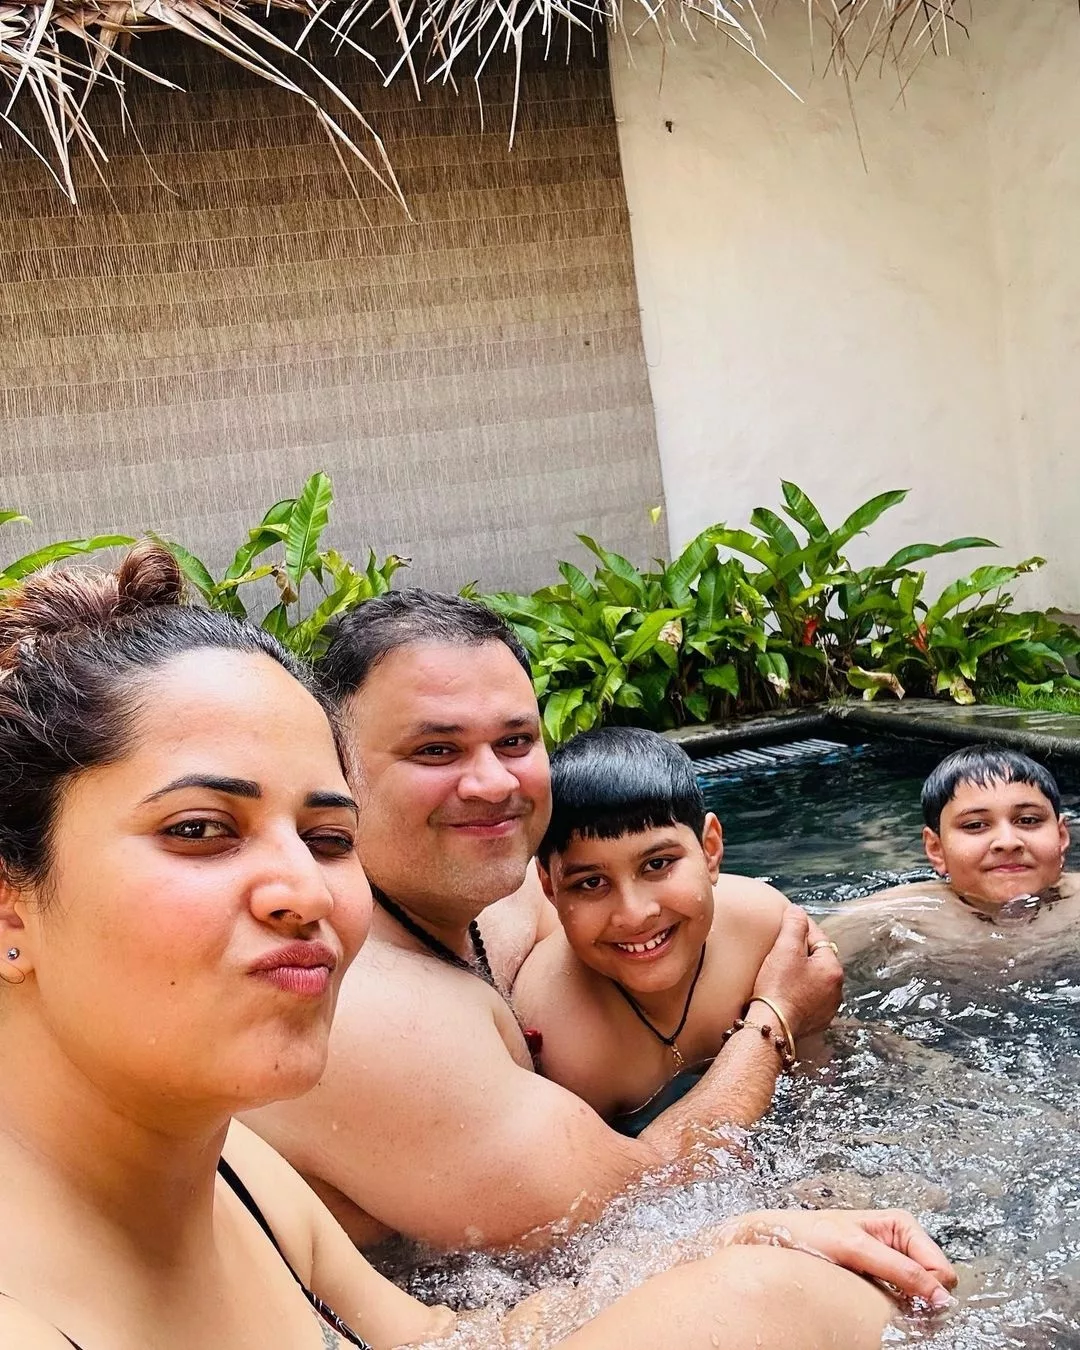 Anasuya Bharadwaj enjoys swimming with family